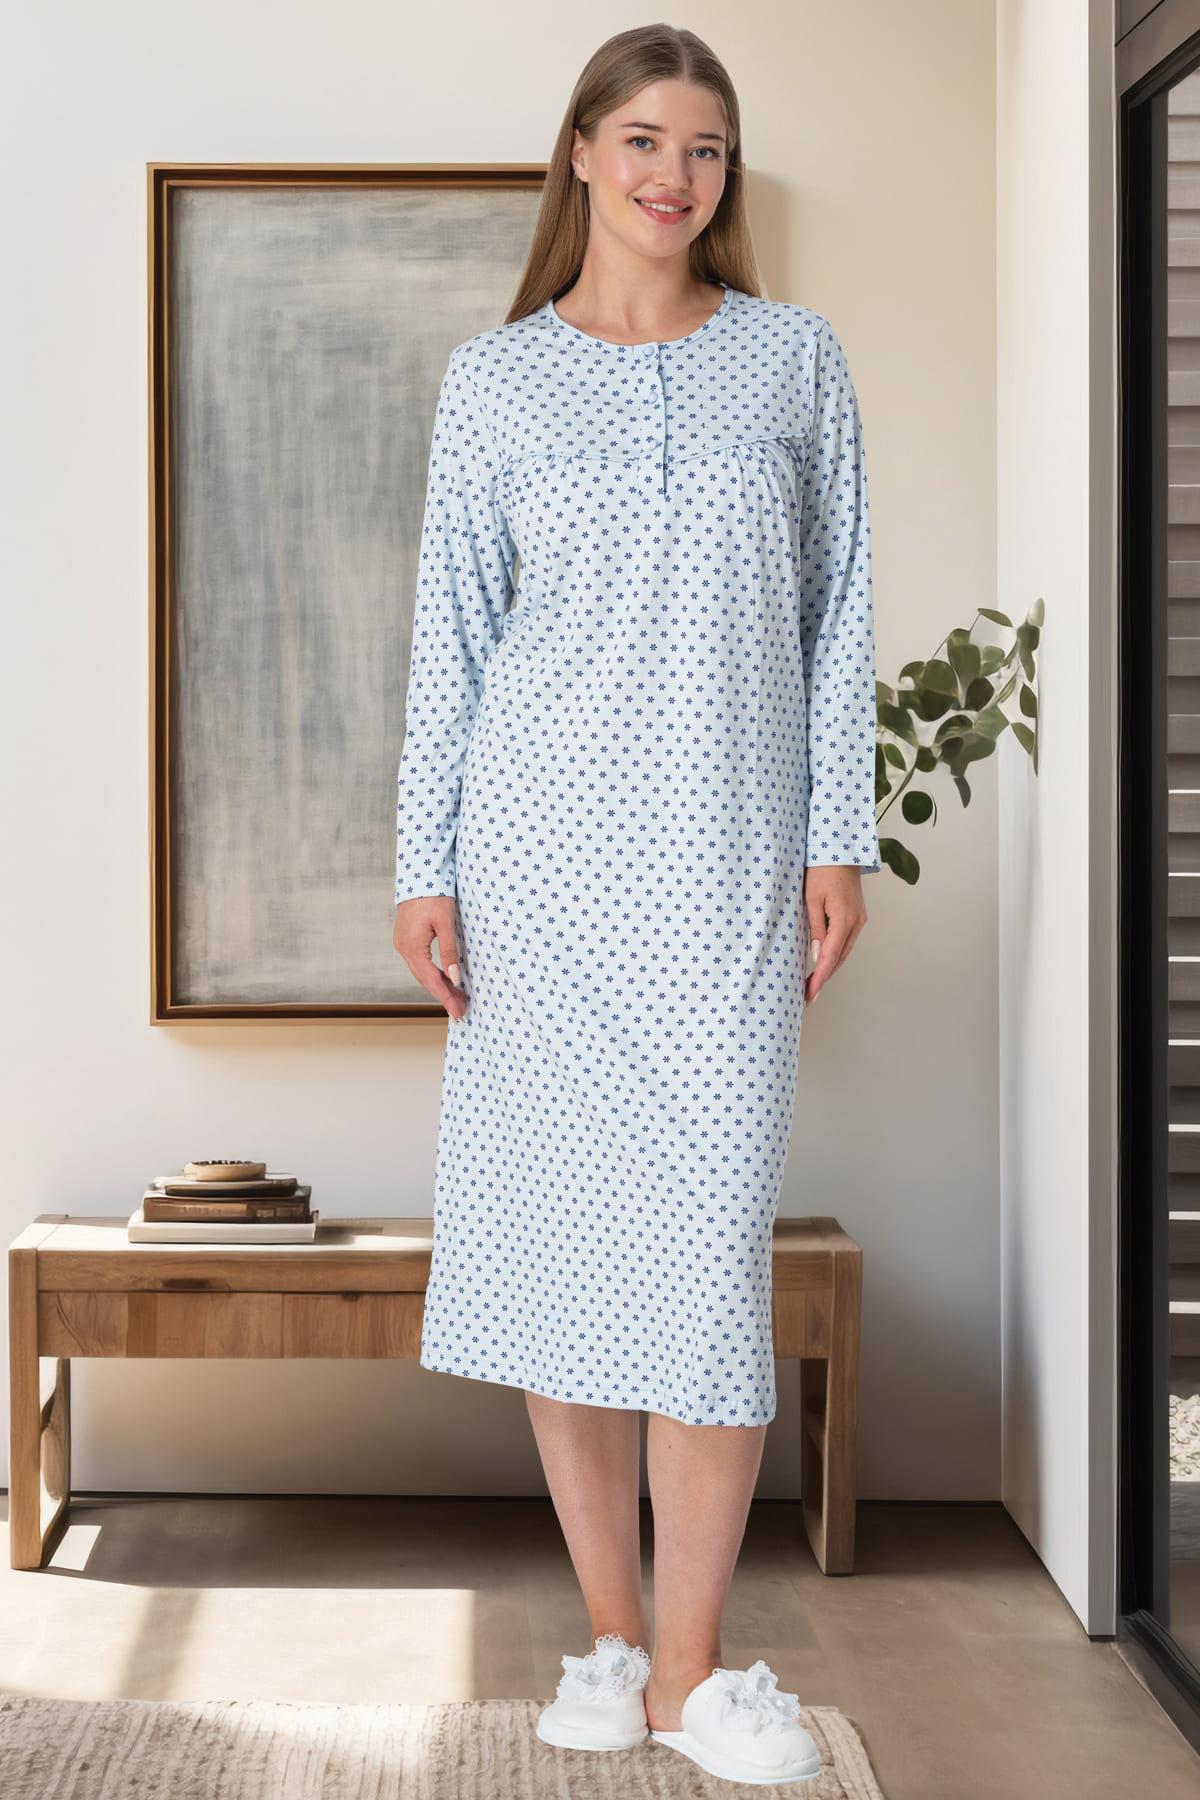 Shopymommy 5829 Polka Dot Plus Size Maternity & Nursing Nightgown Blue